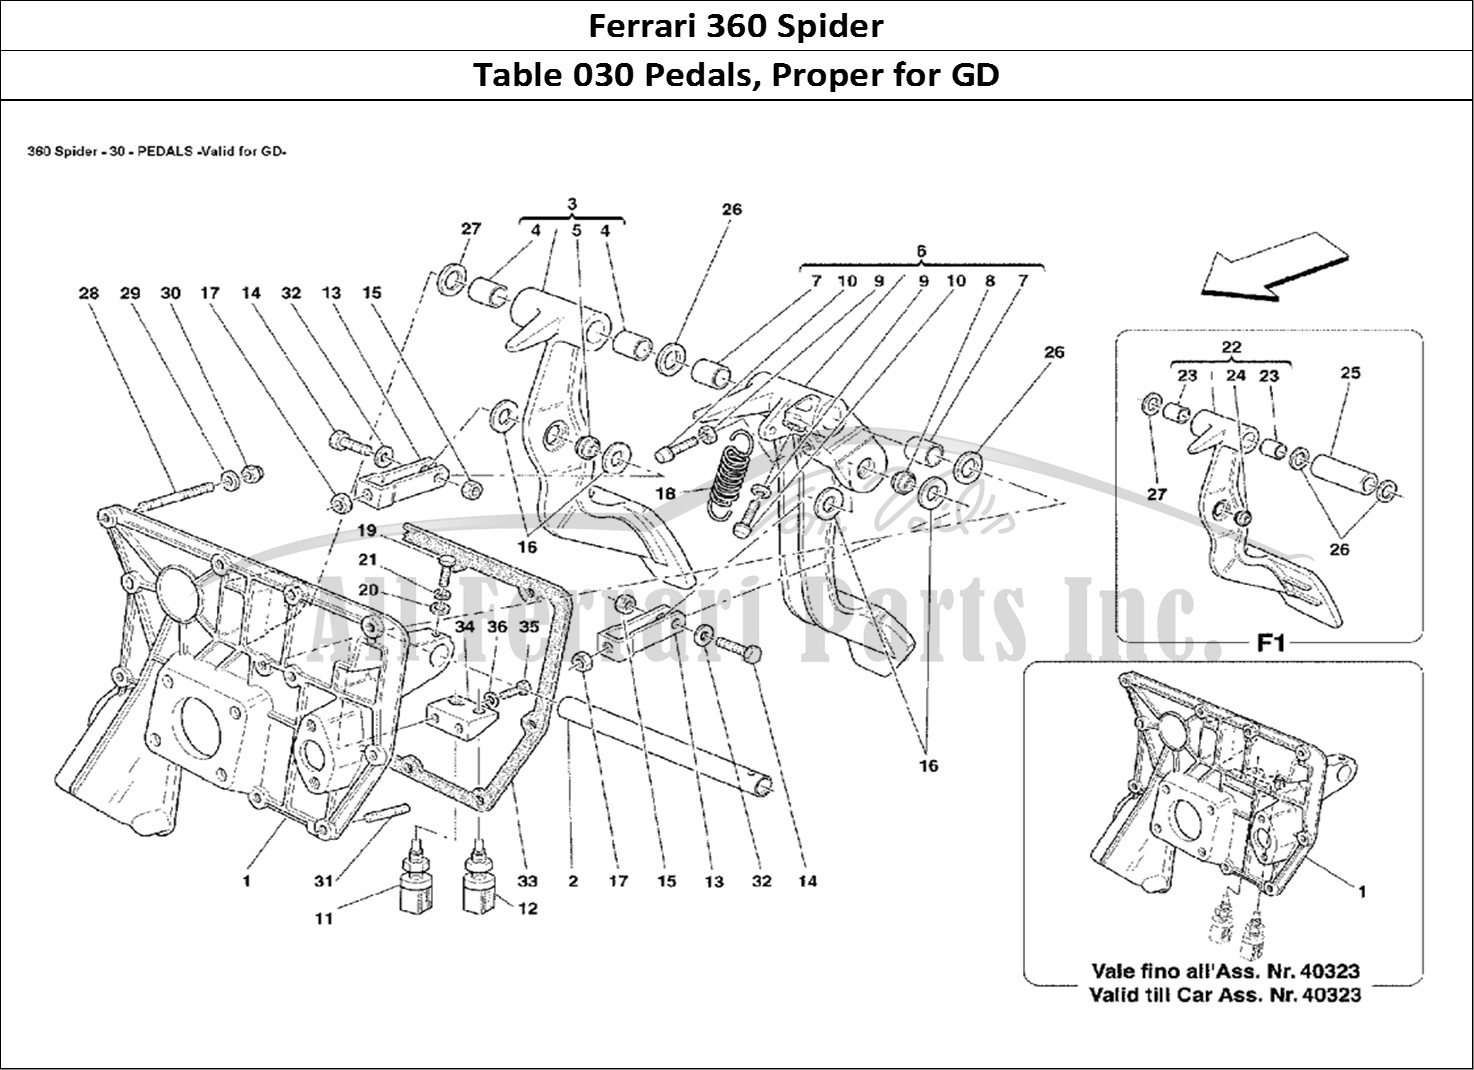 Ferrari Parts Ferrari 360 Spider Page 030 Pedals - Valid for GD